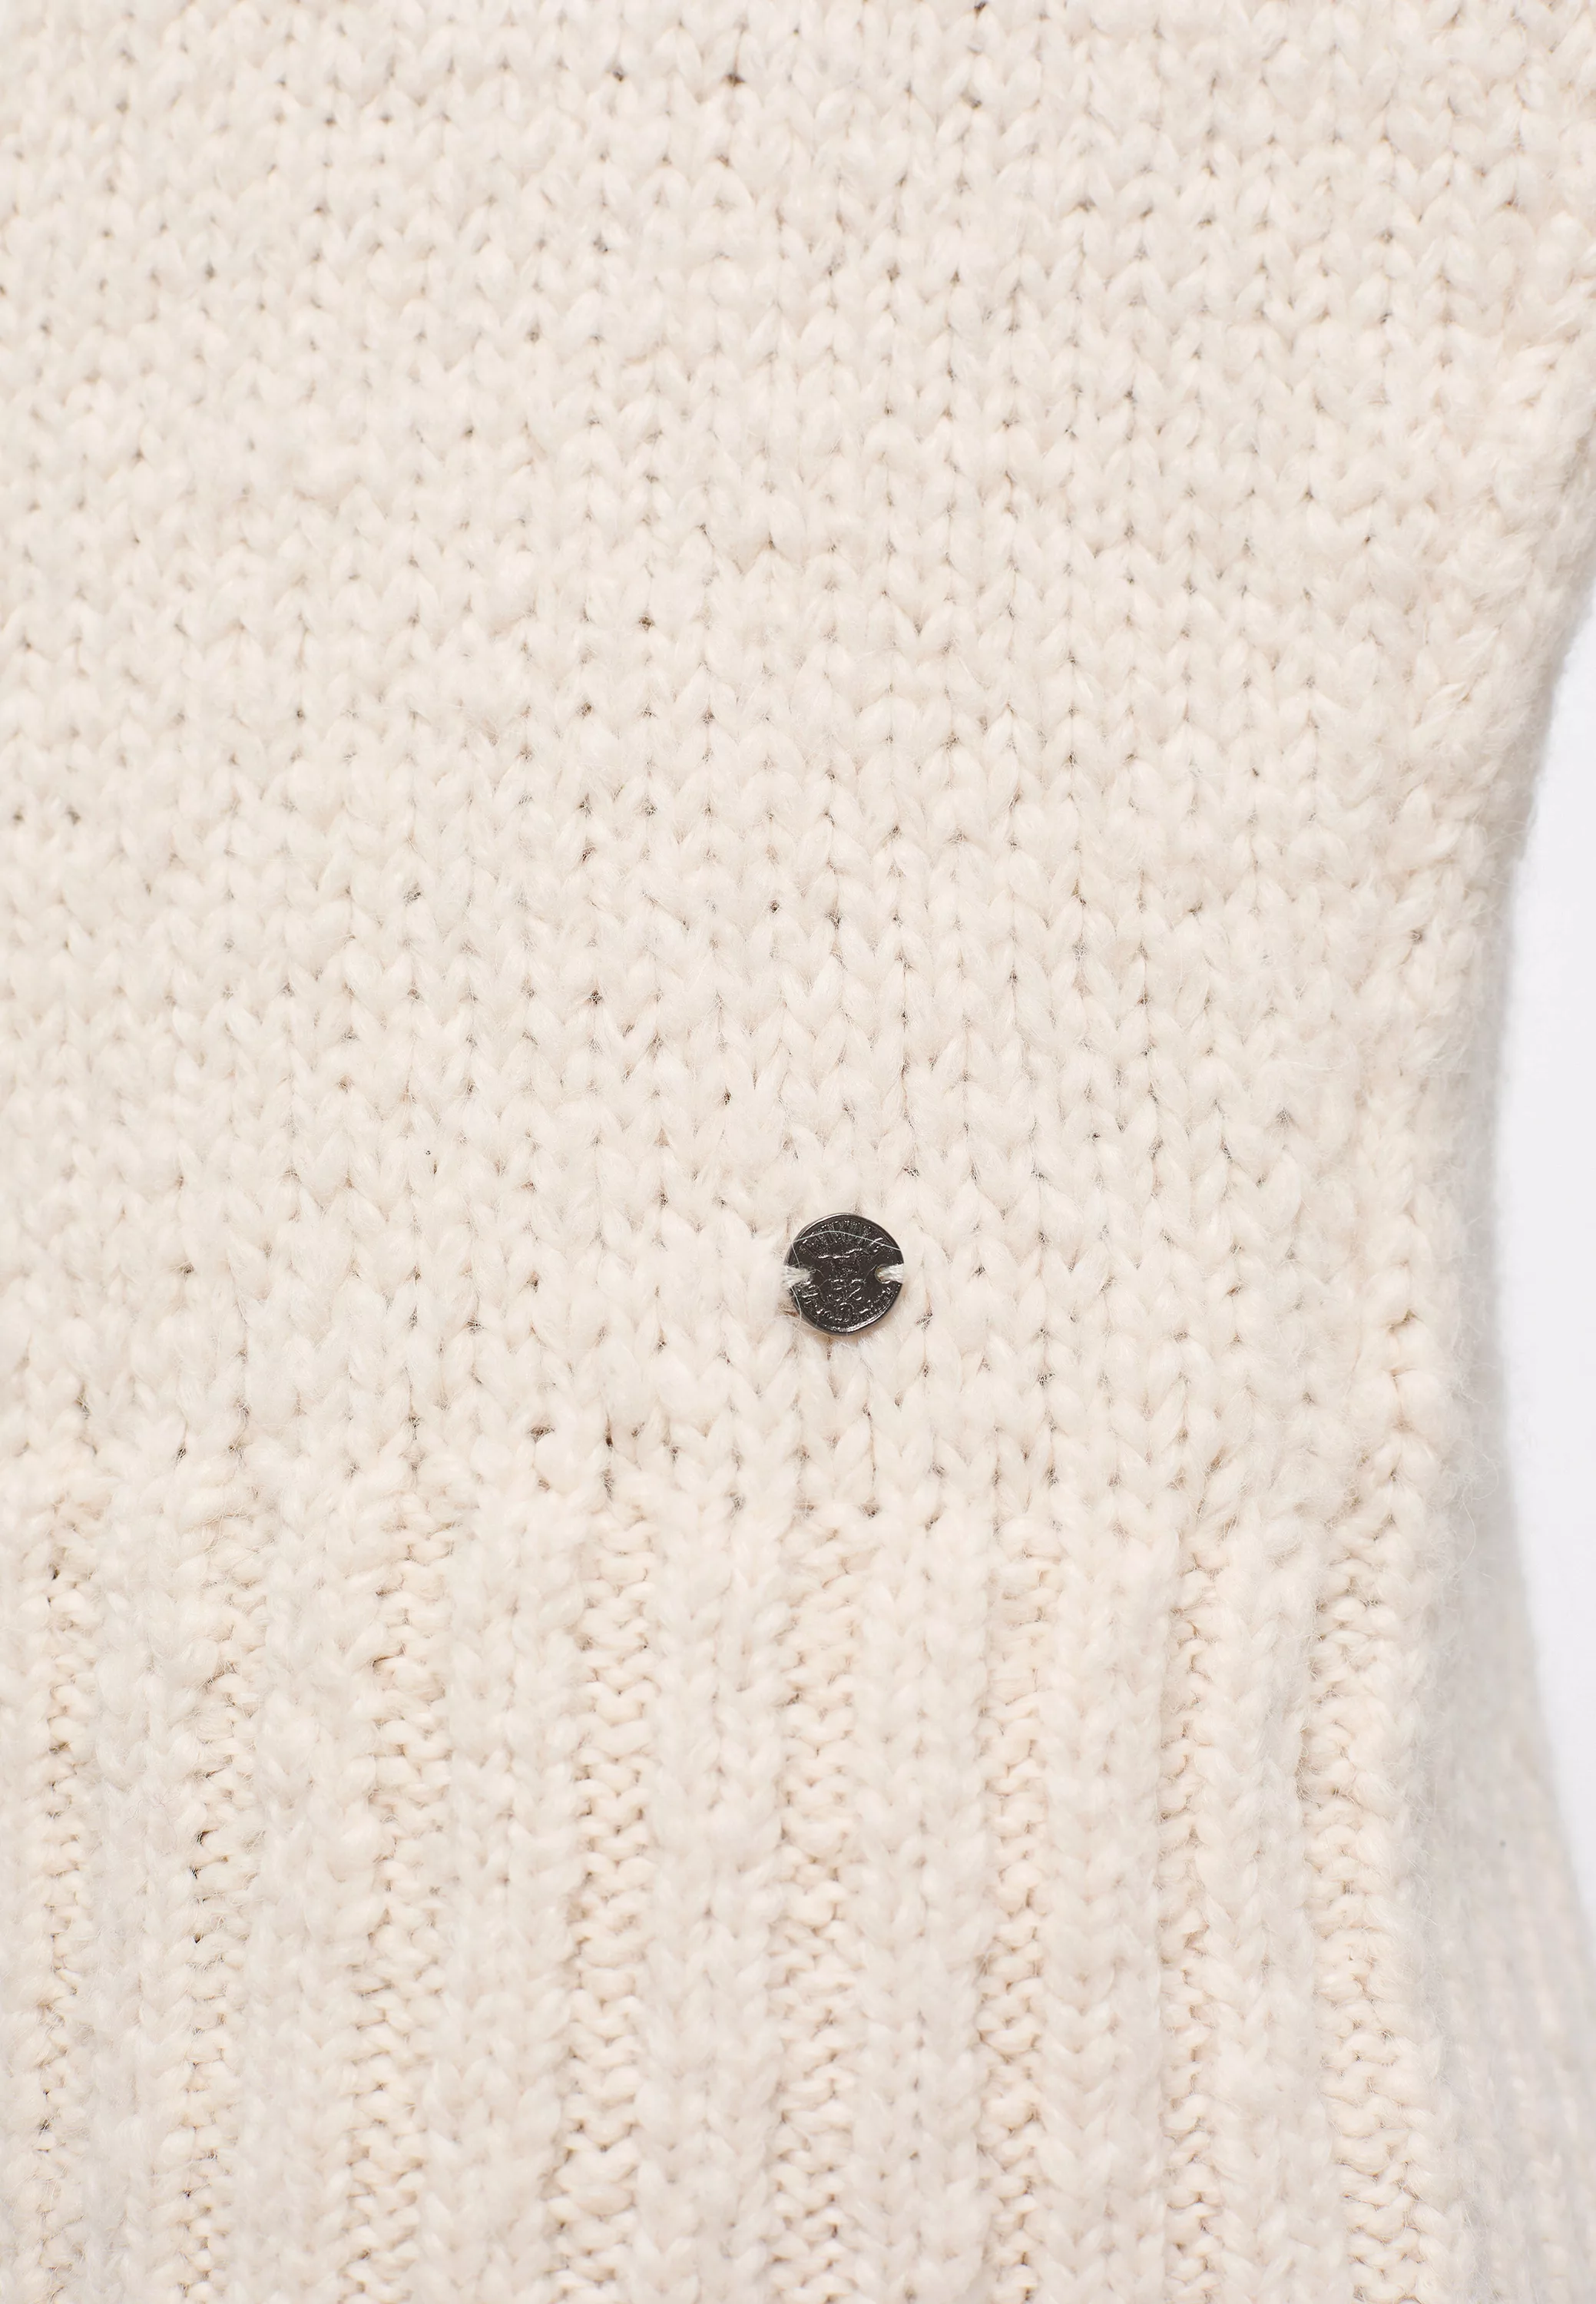 MUSTANG Sweater "Style Carla Troyer" günstig online kaufen